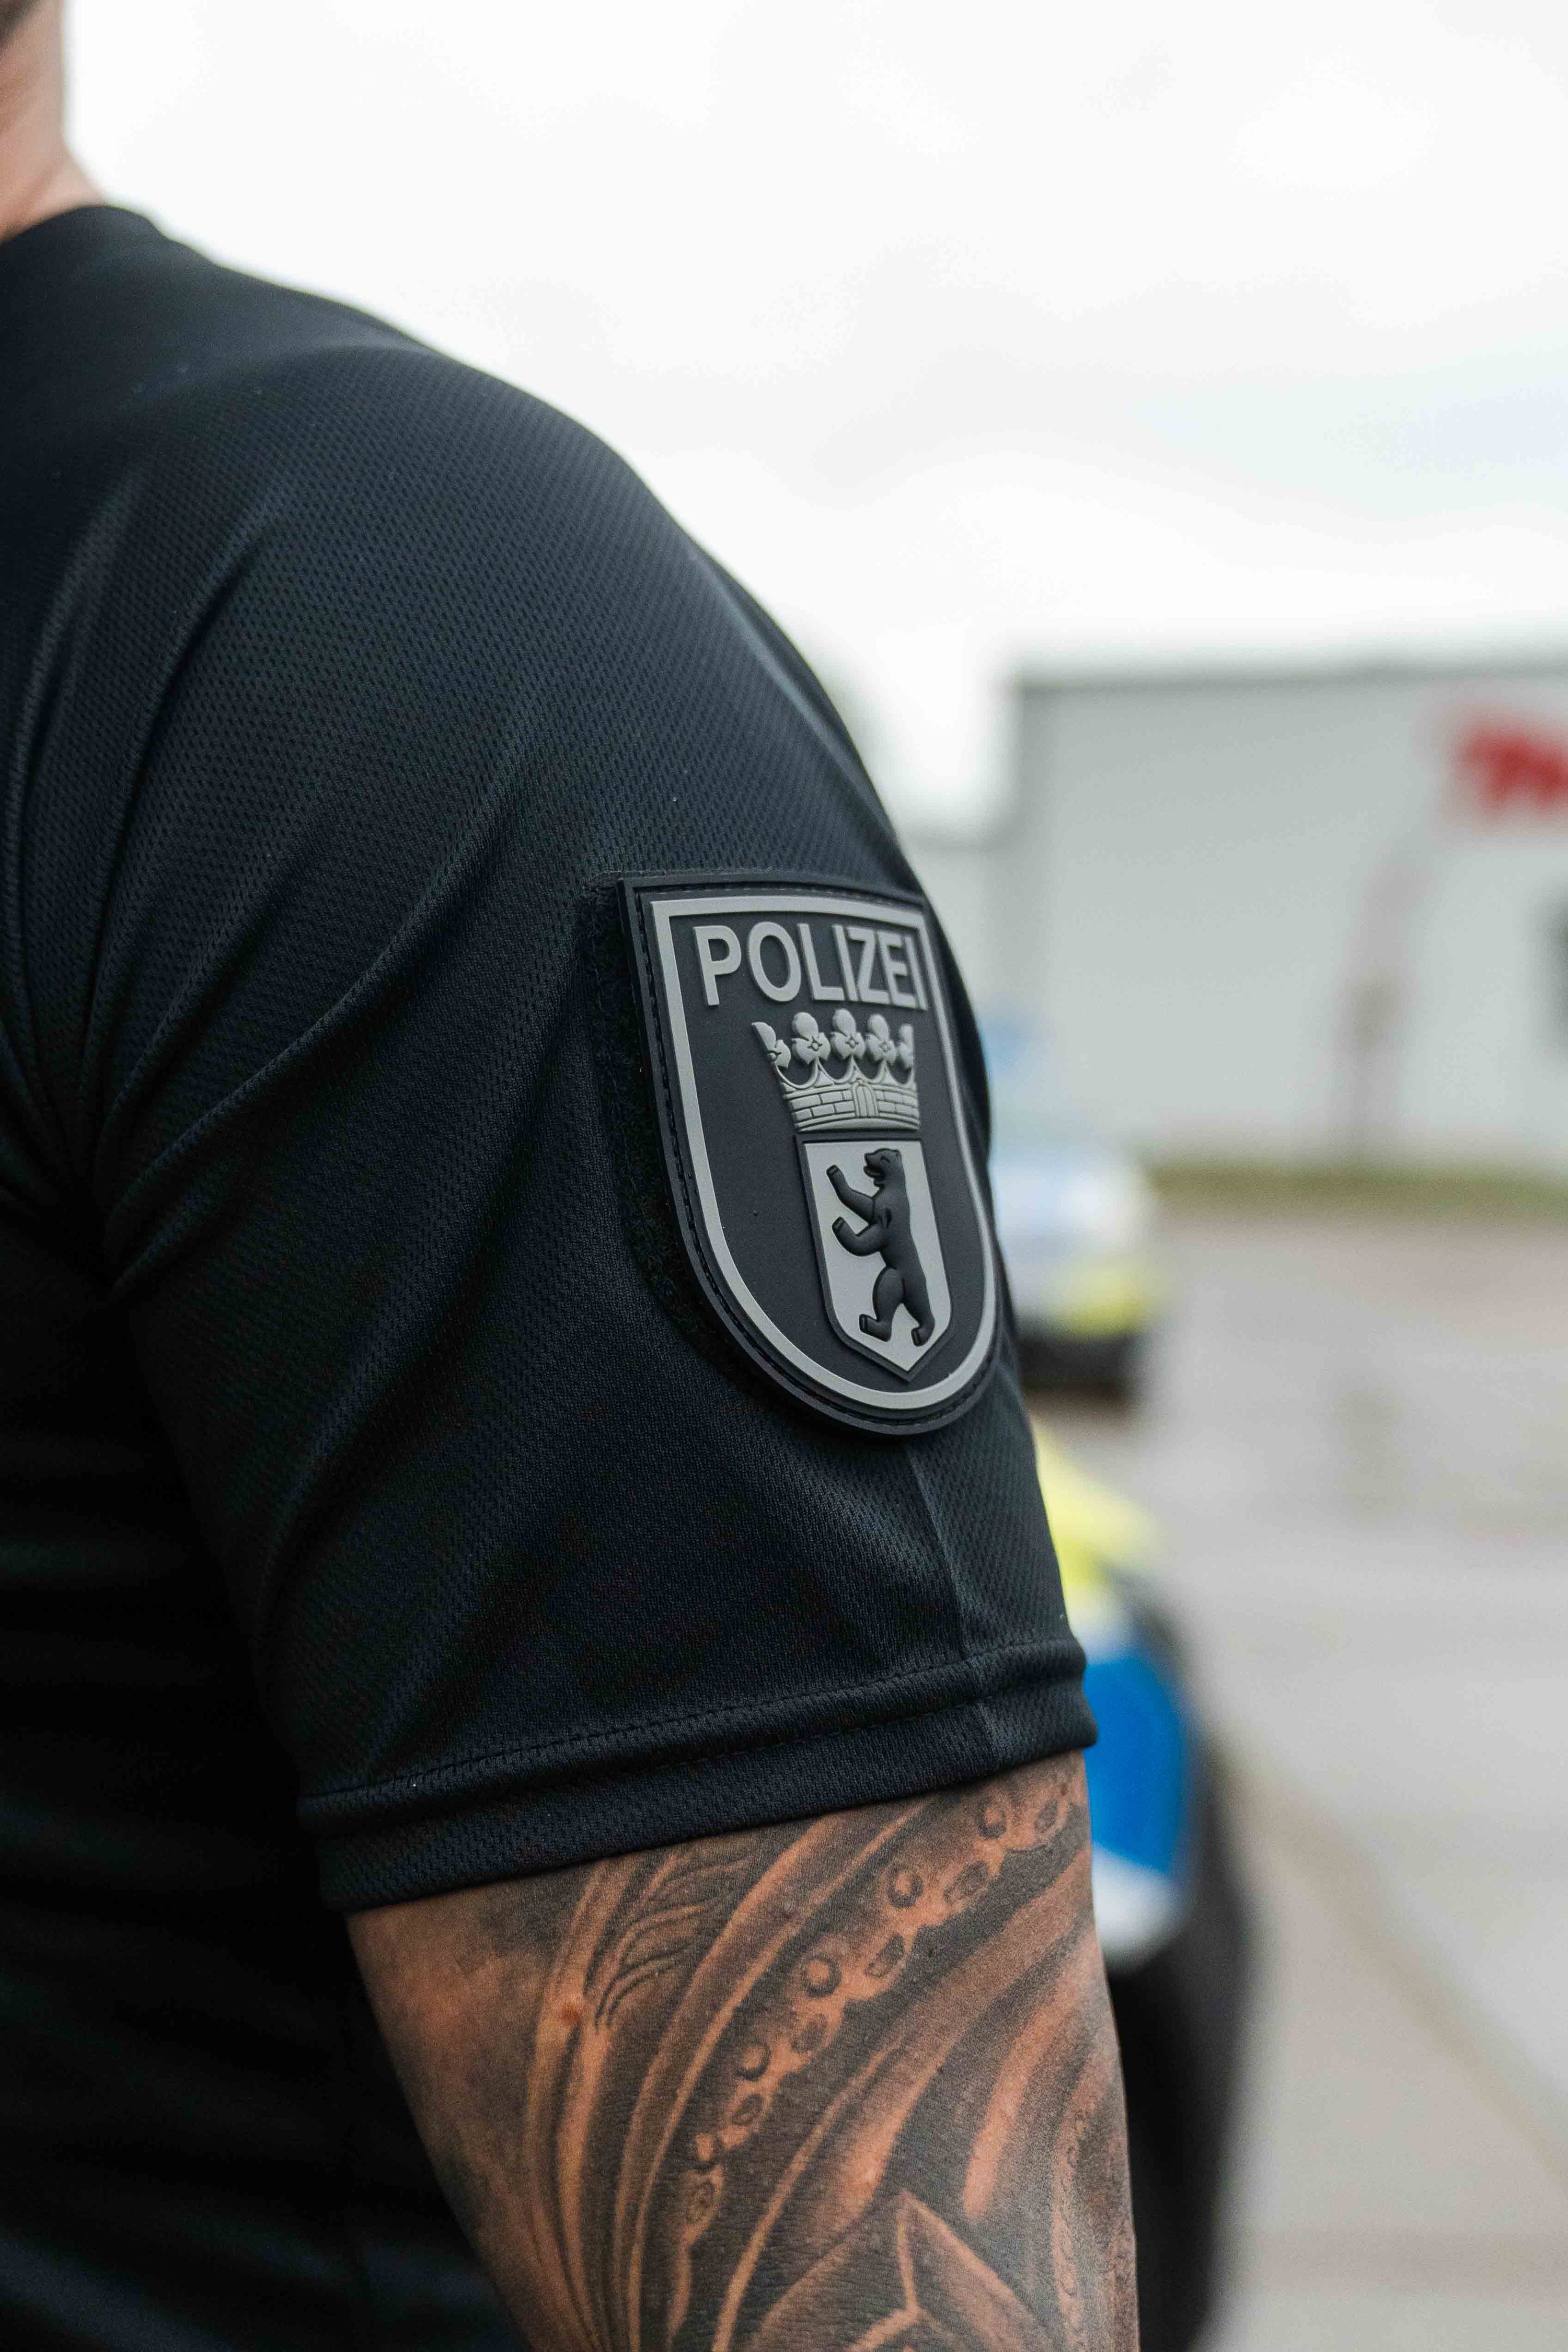 Funktions-Shirts für Polizeidienst